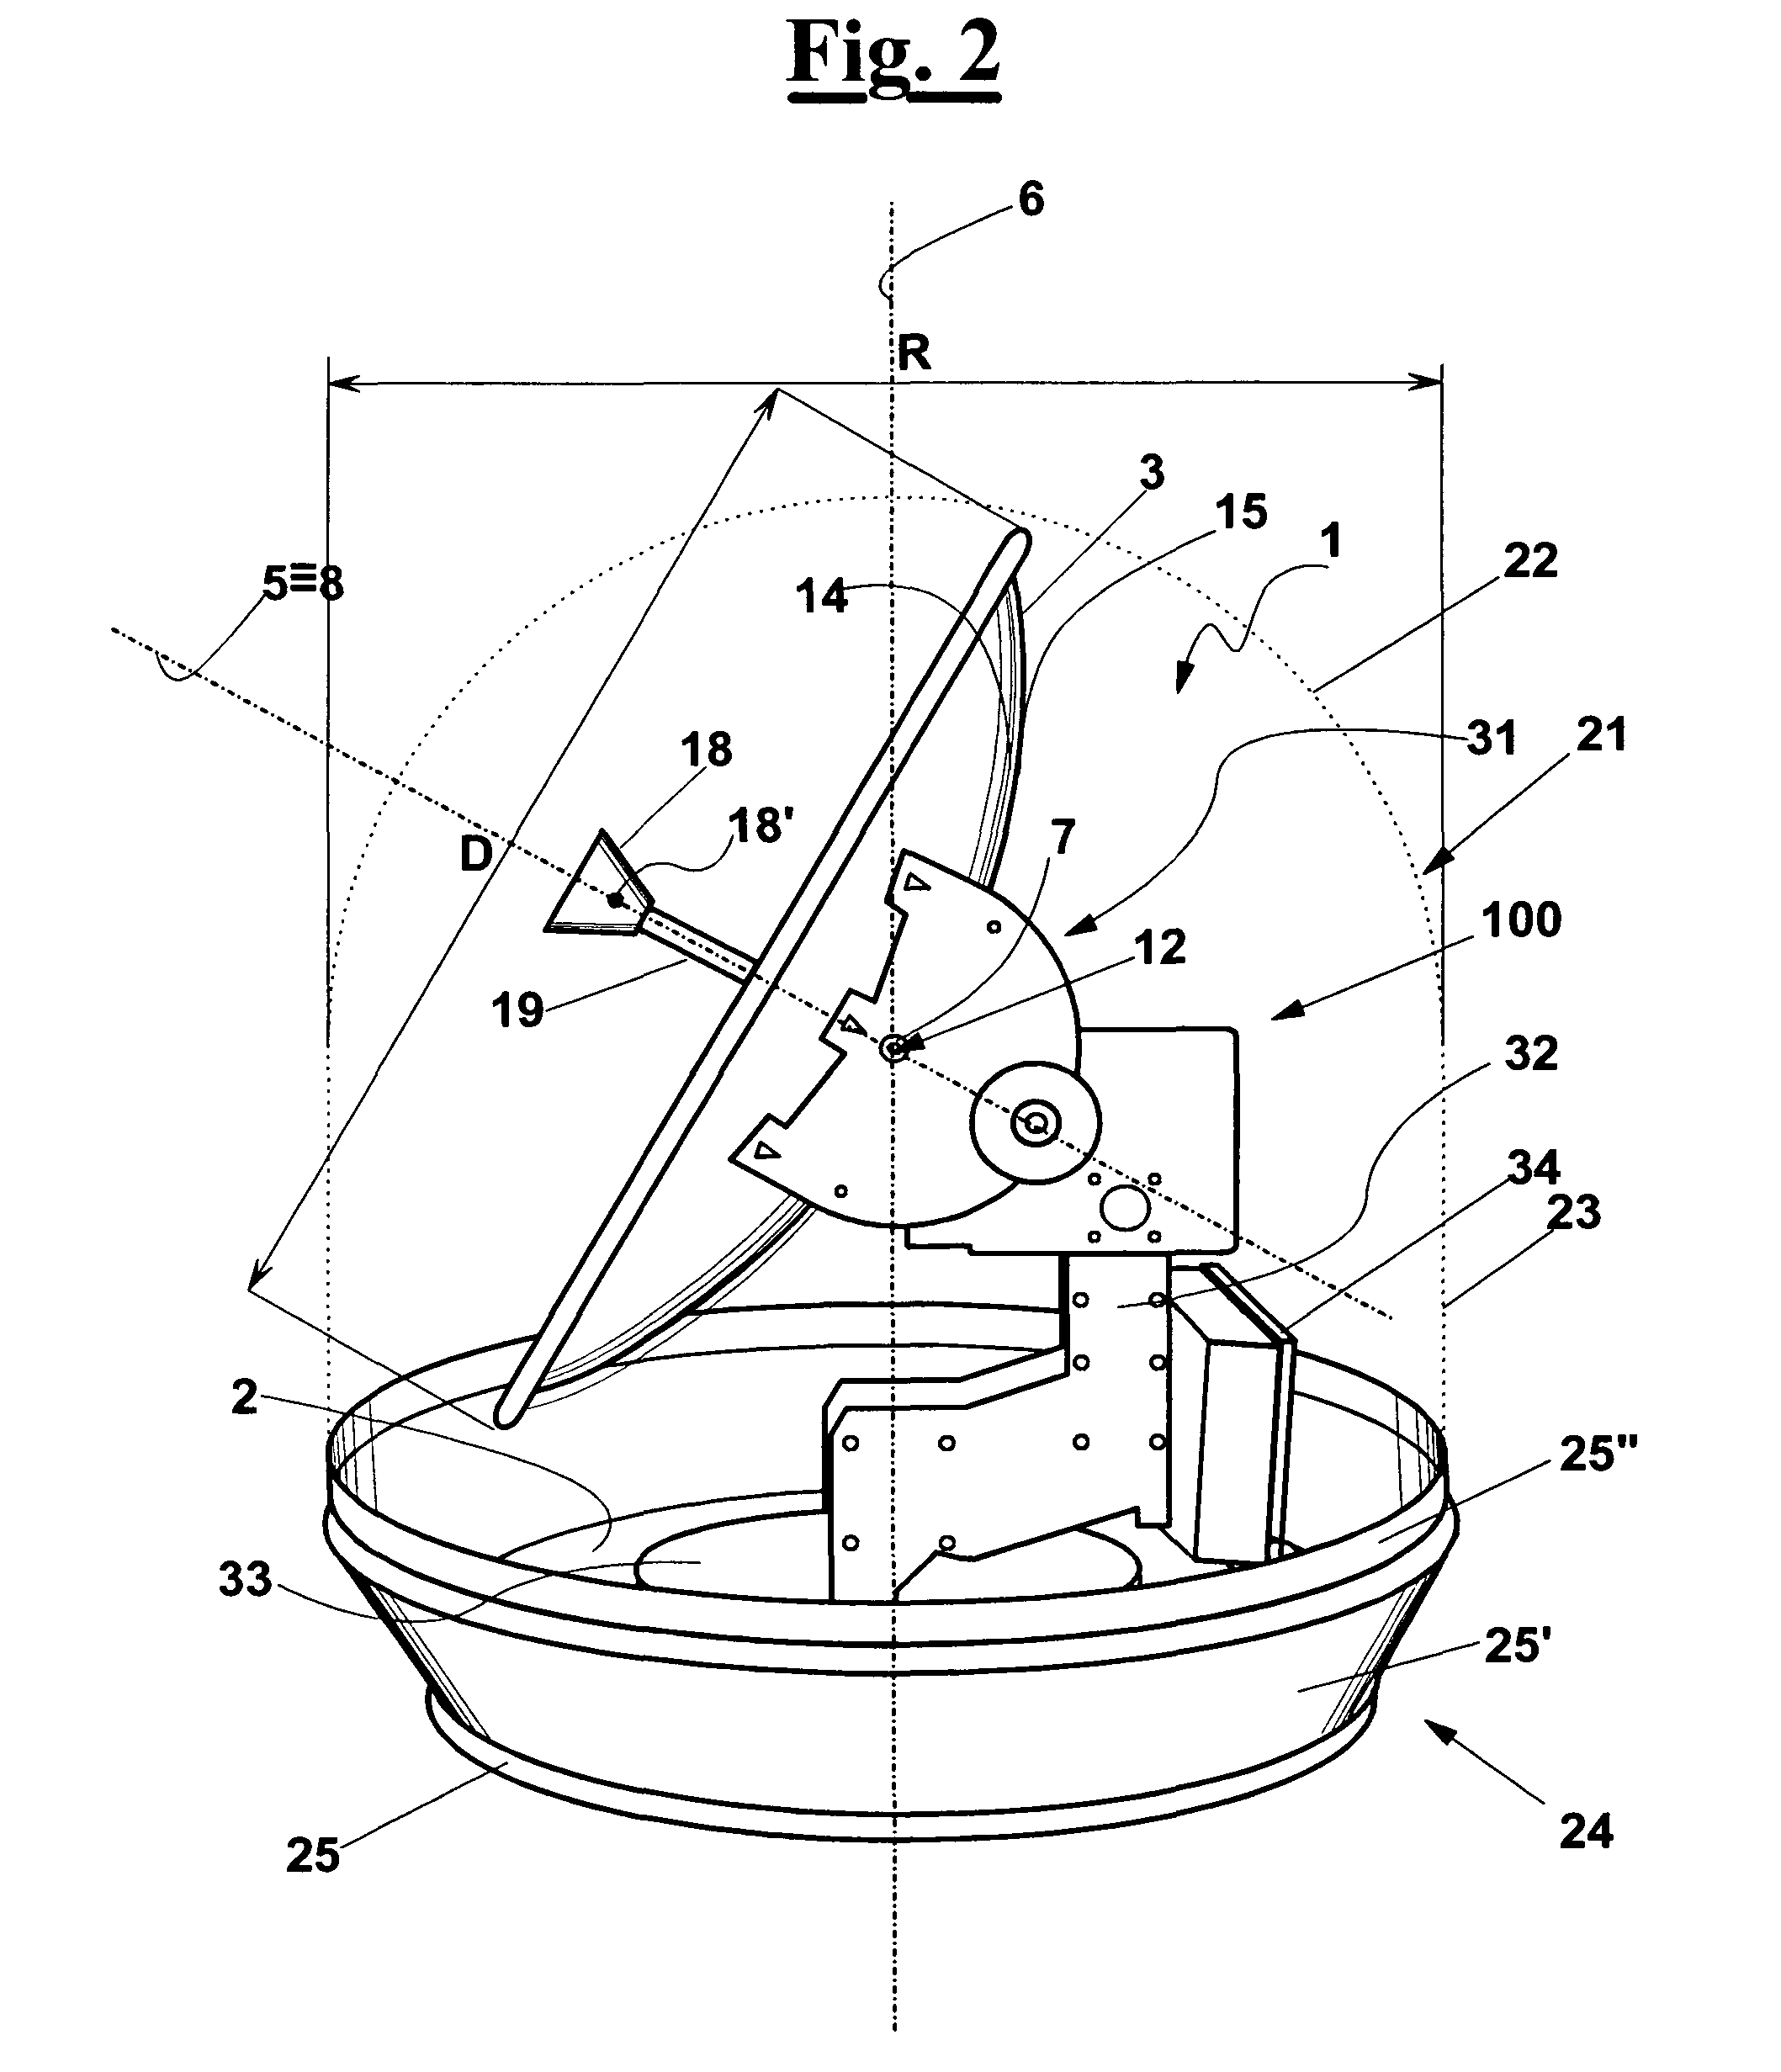 Three-axes aerial dish pointing device with minimum radome encumbrance